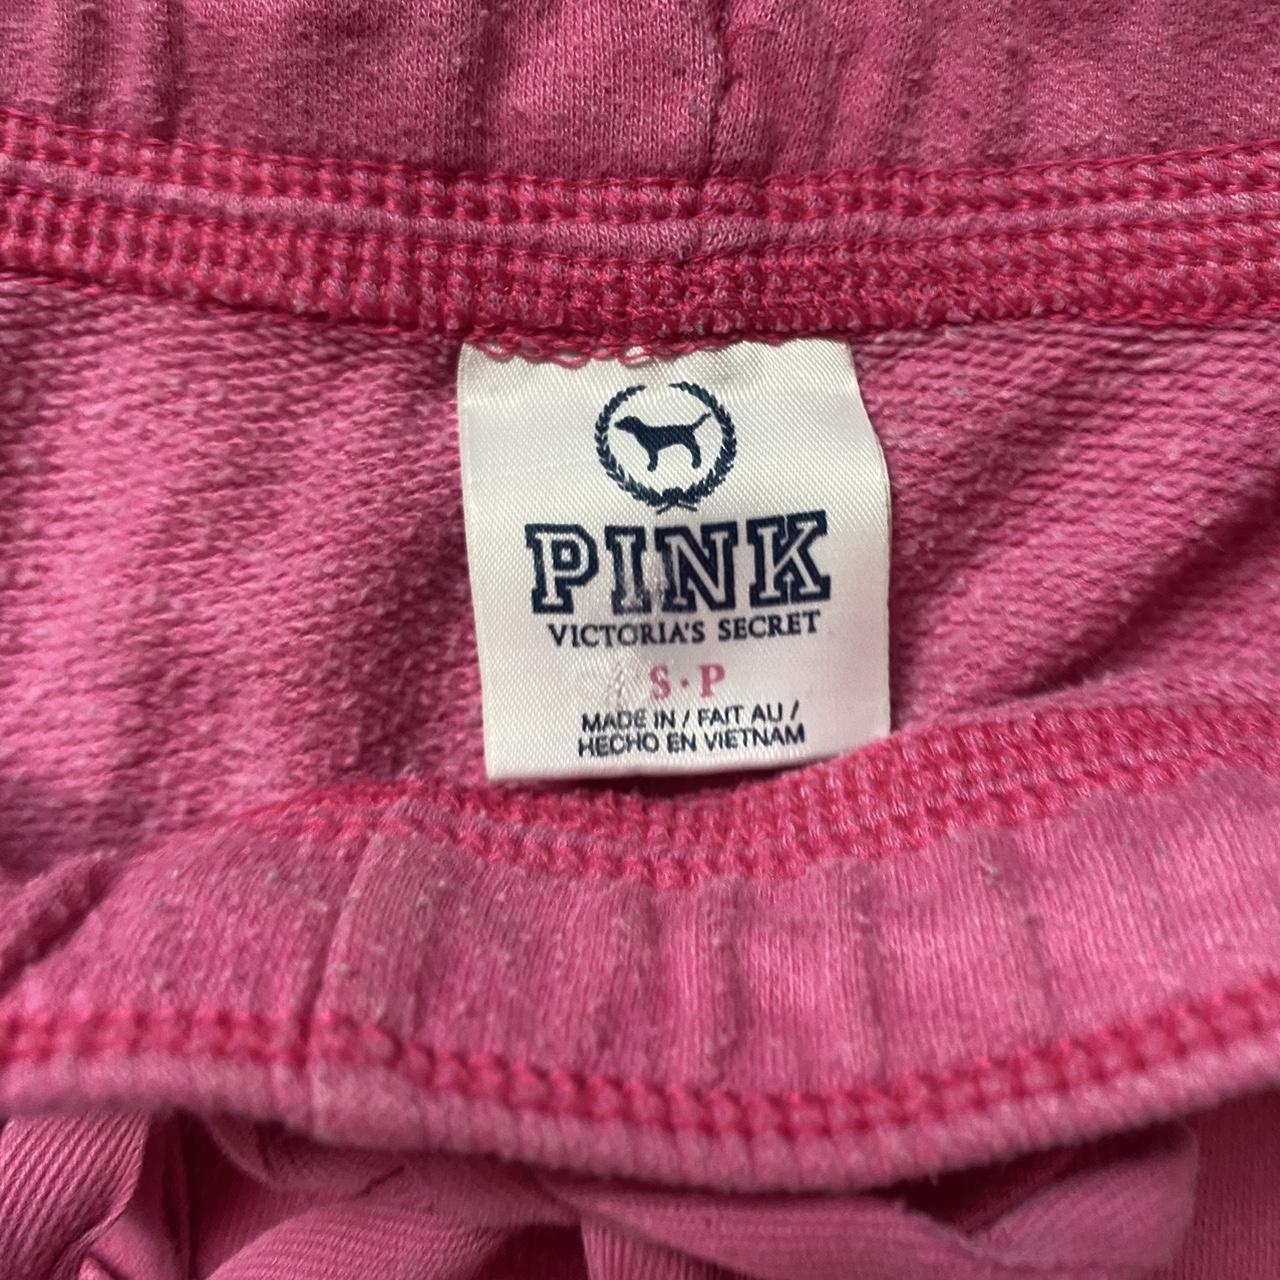 Victoria secret 'PINK' everyday lounge classic pant - Depop